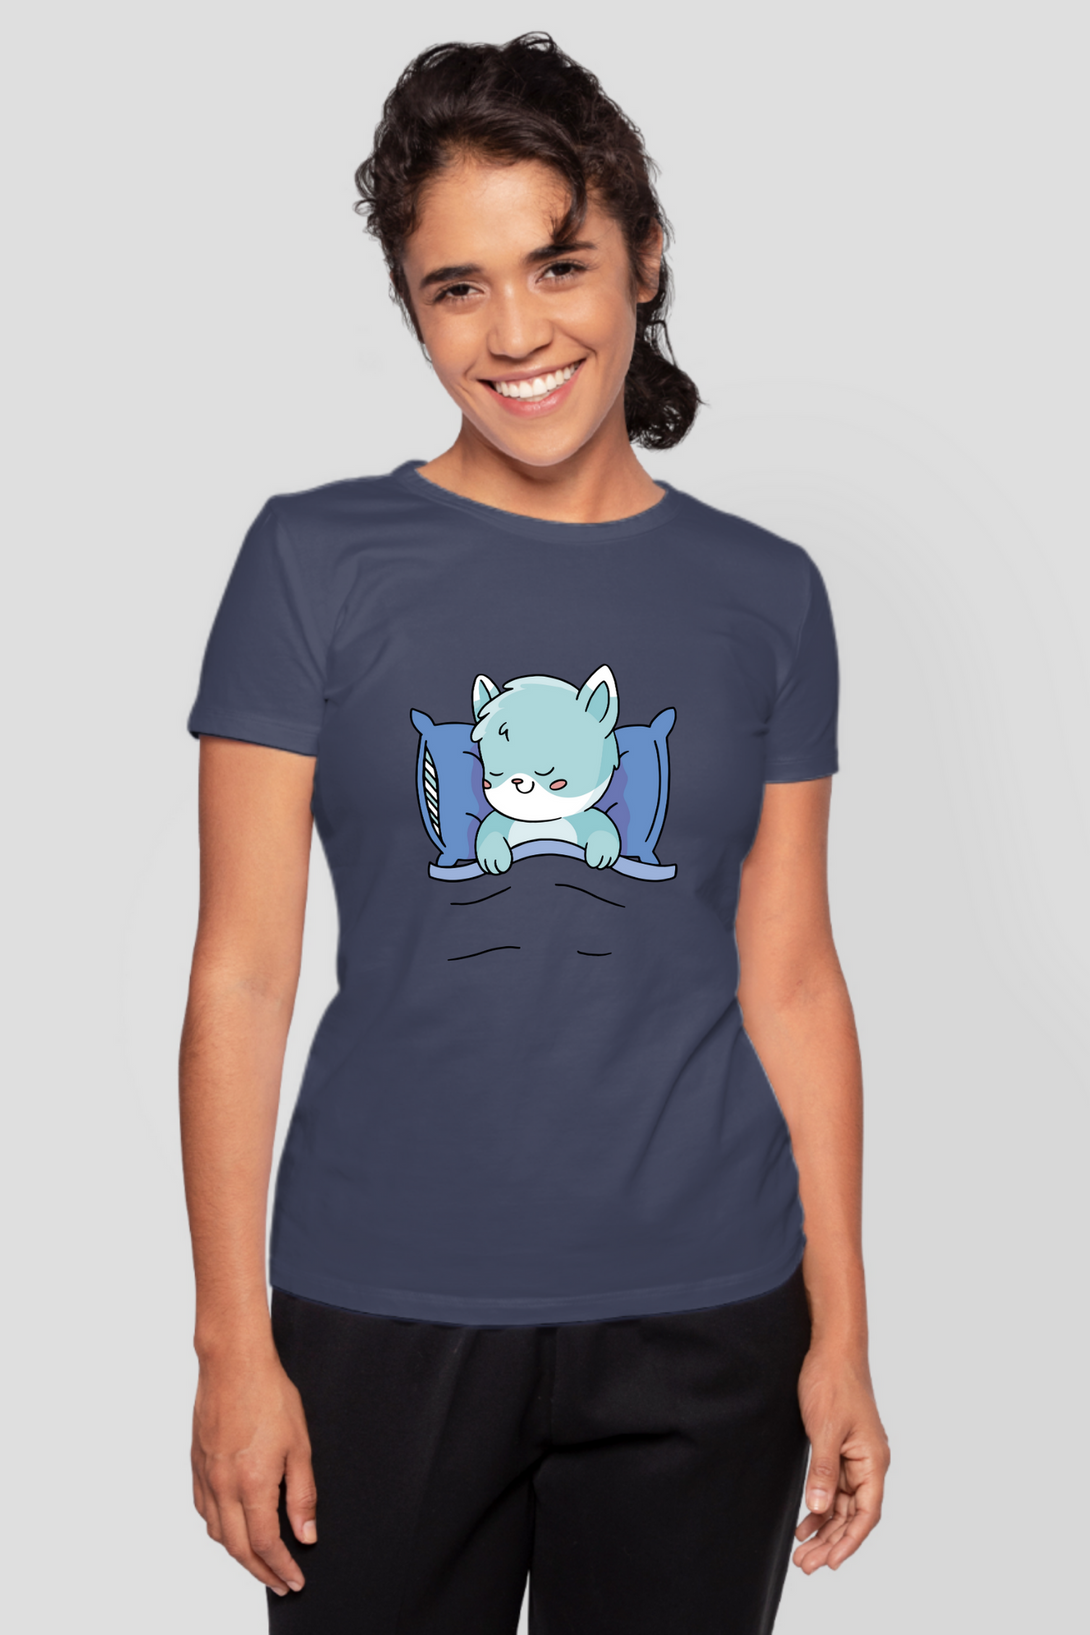 Cute Sleeping Cat Printed T-Shirt For Women - WowWaves - 12